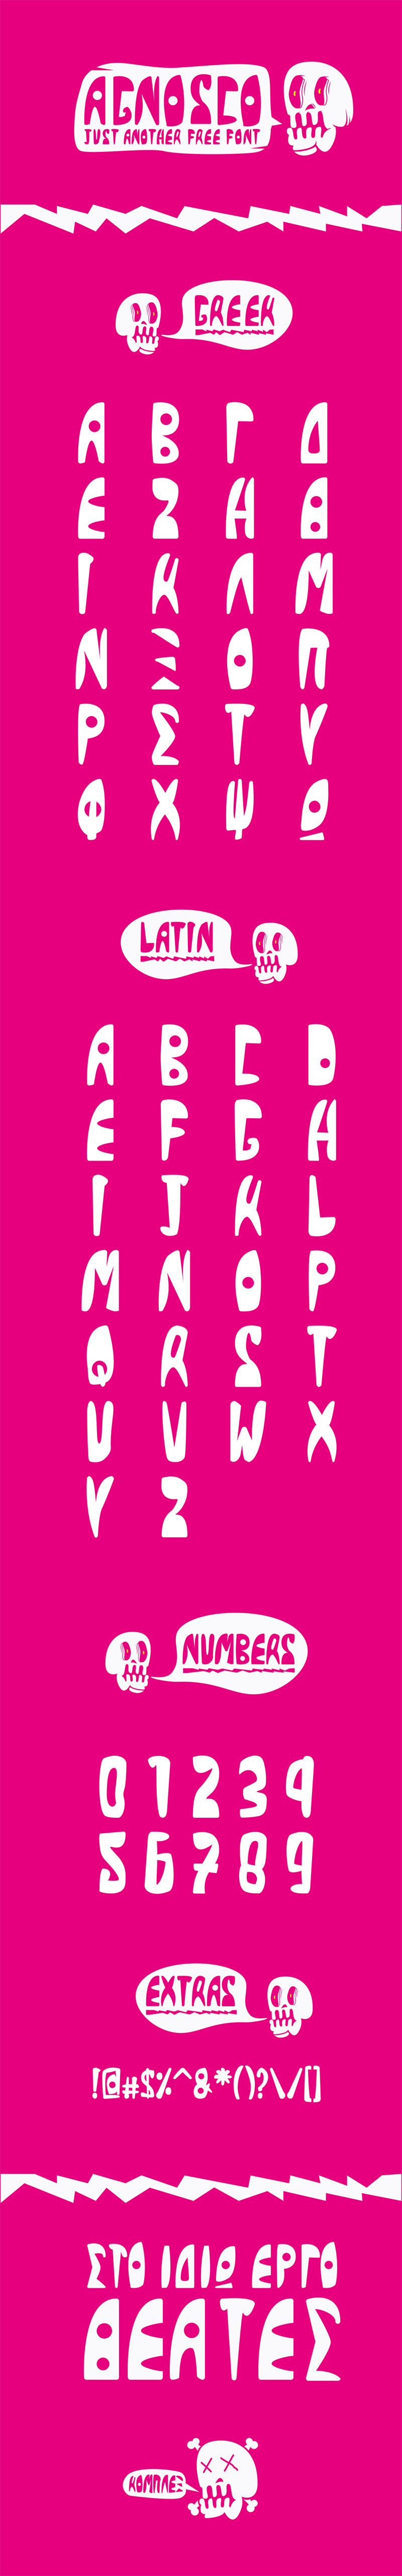 free font typography   greek letters AGNOSCO design download